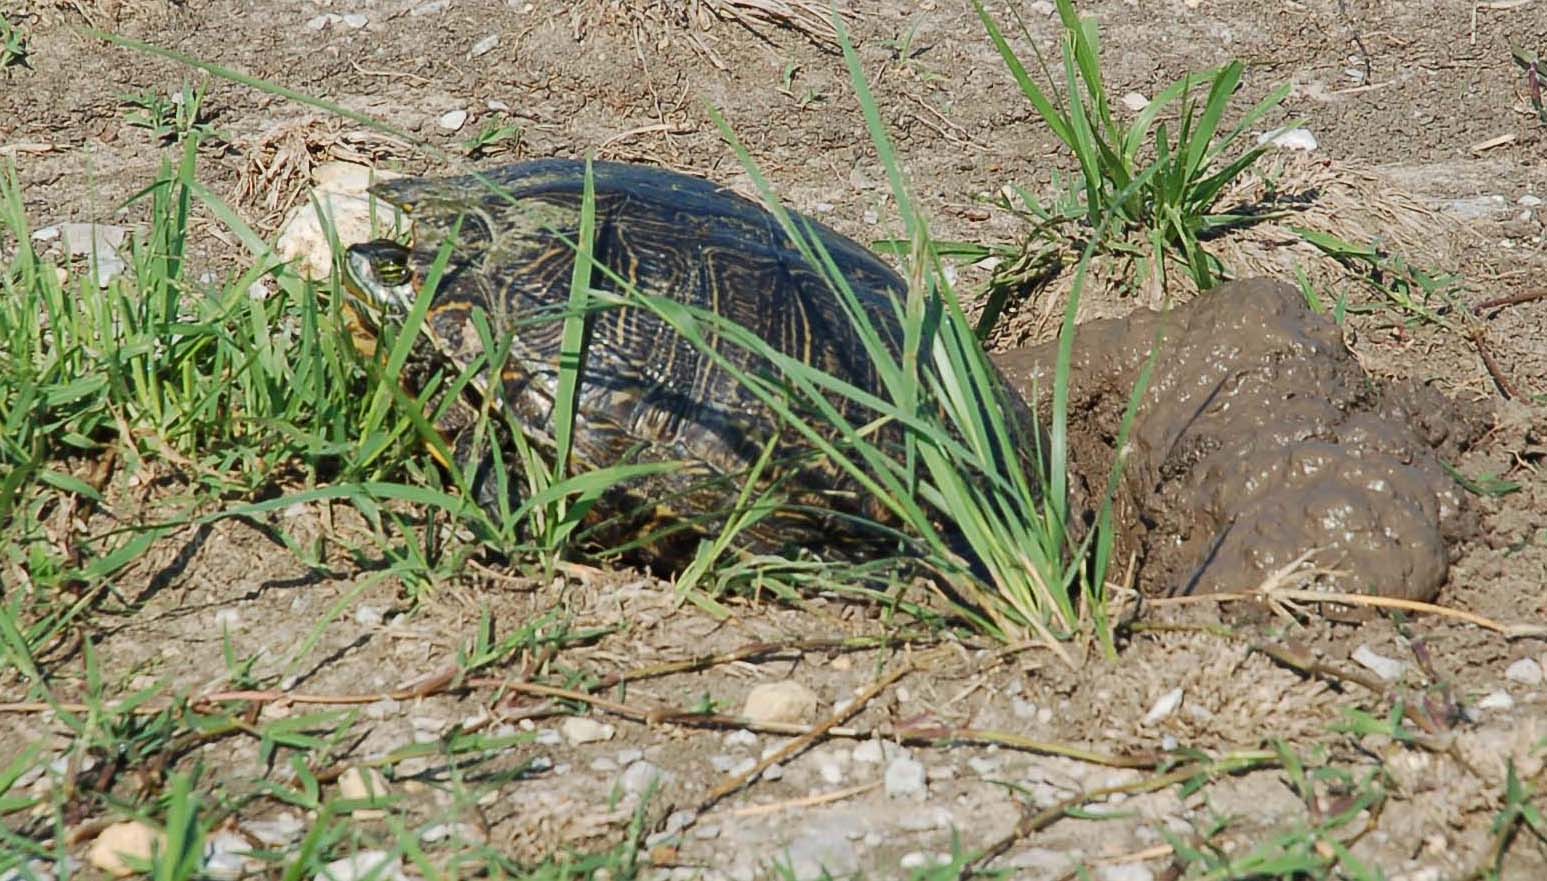  Nesting turtle 